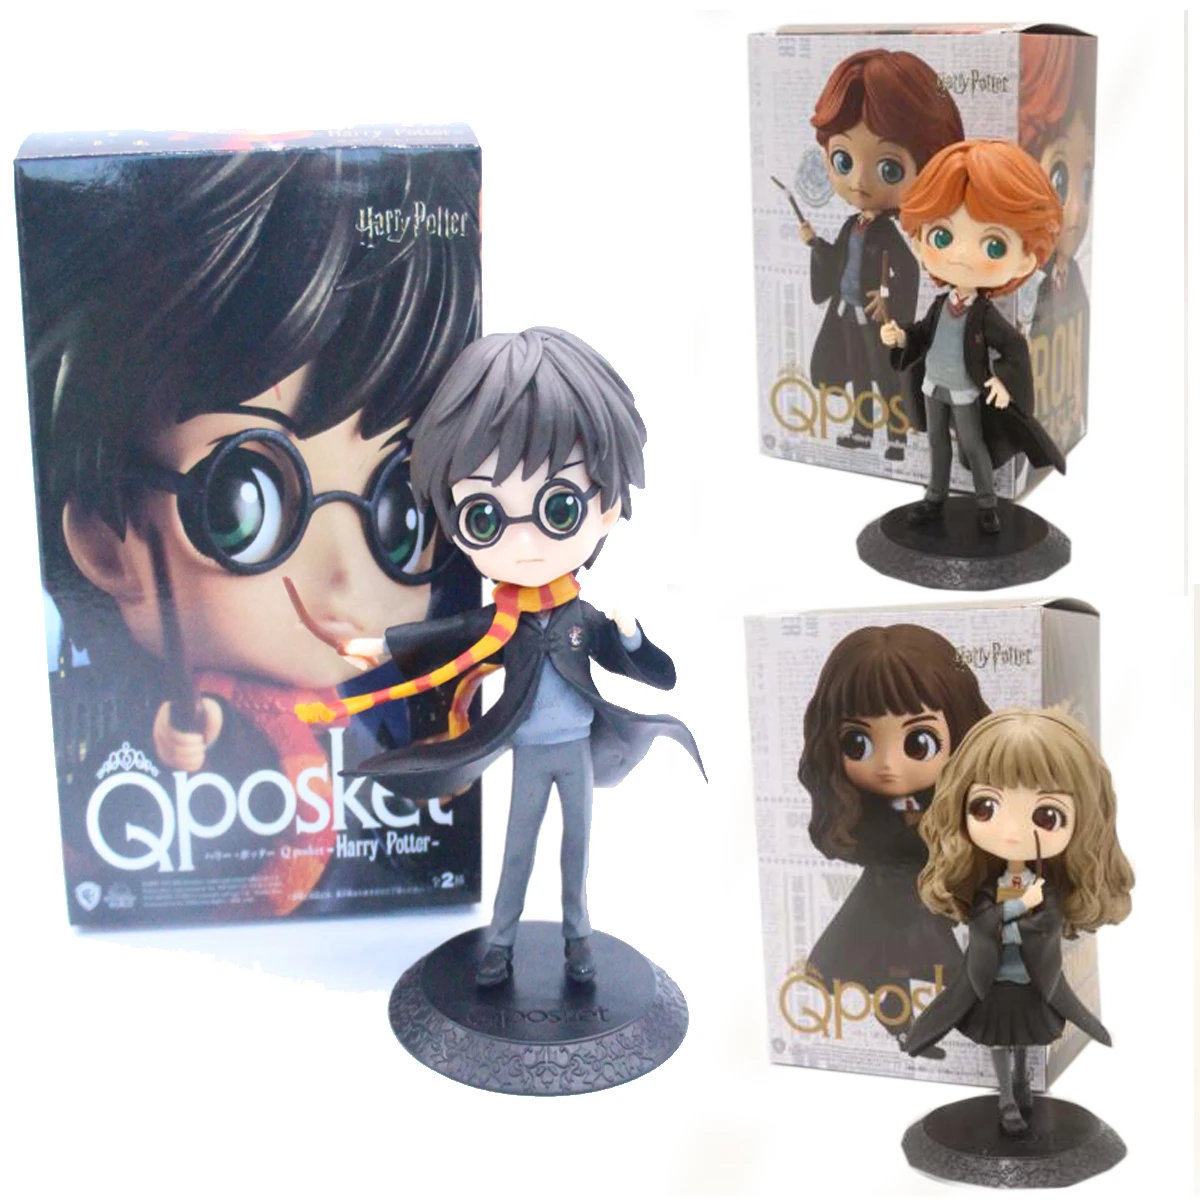 

QPosket Cute Big eyes Harry Potter Ron Weasley Hermione Granger Draco Malfoy Newt Vinyl Figure Model Toys 15cm